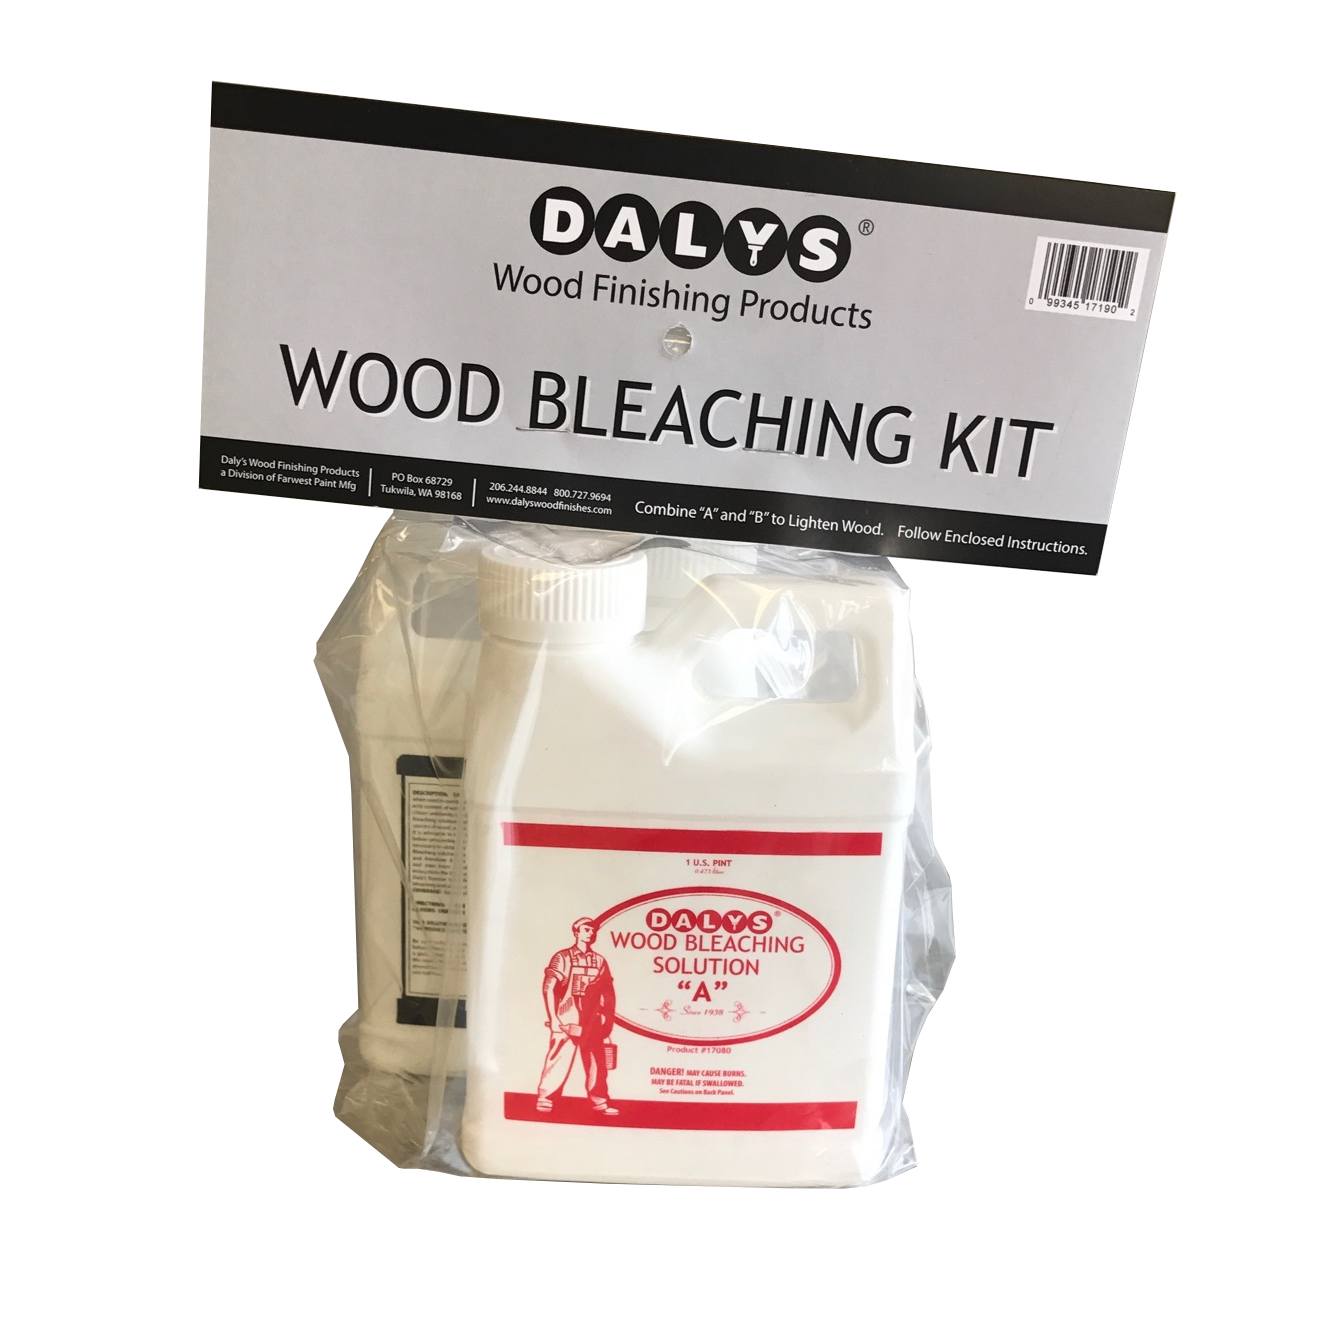 A & B Wood Bleaching Kit